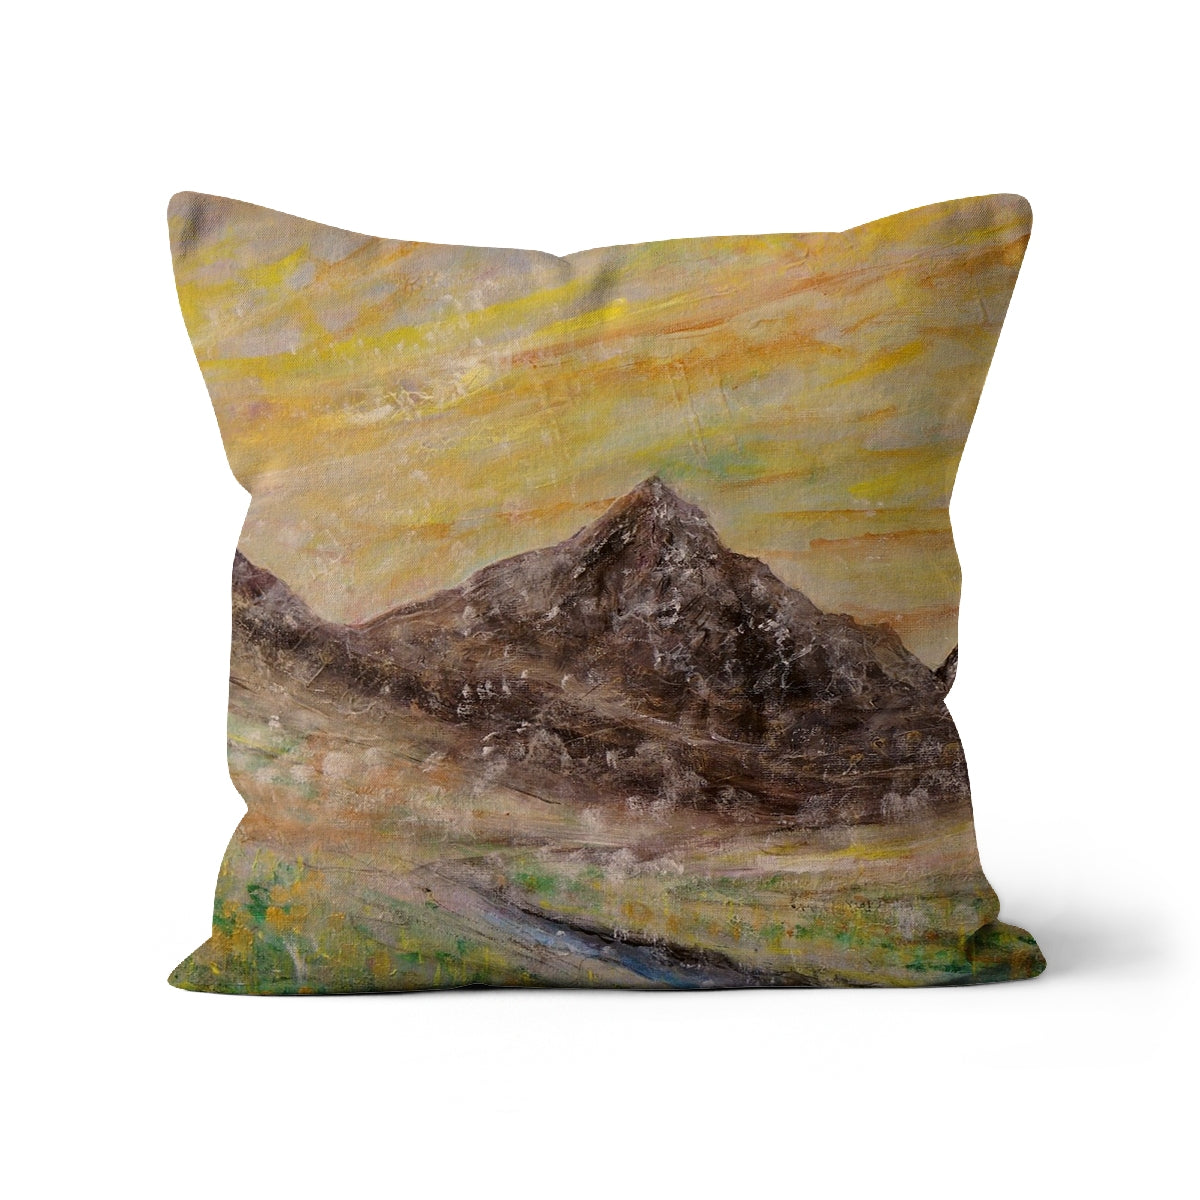 Glen Rosa Mist Arran Art Gifts Cushion-Cushions-Arran Art Gallery-Canvas-18"x18"-Paintings, Prints, Homeware, Art Gifts From Scotland By Scottish Artist Kevin Hunter